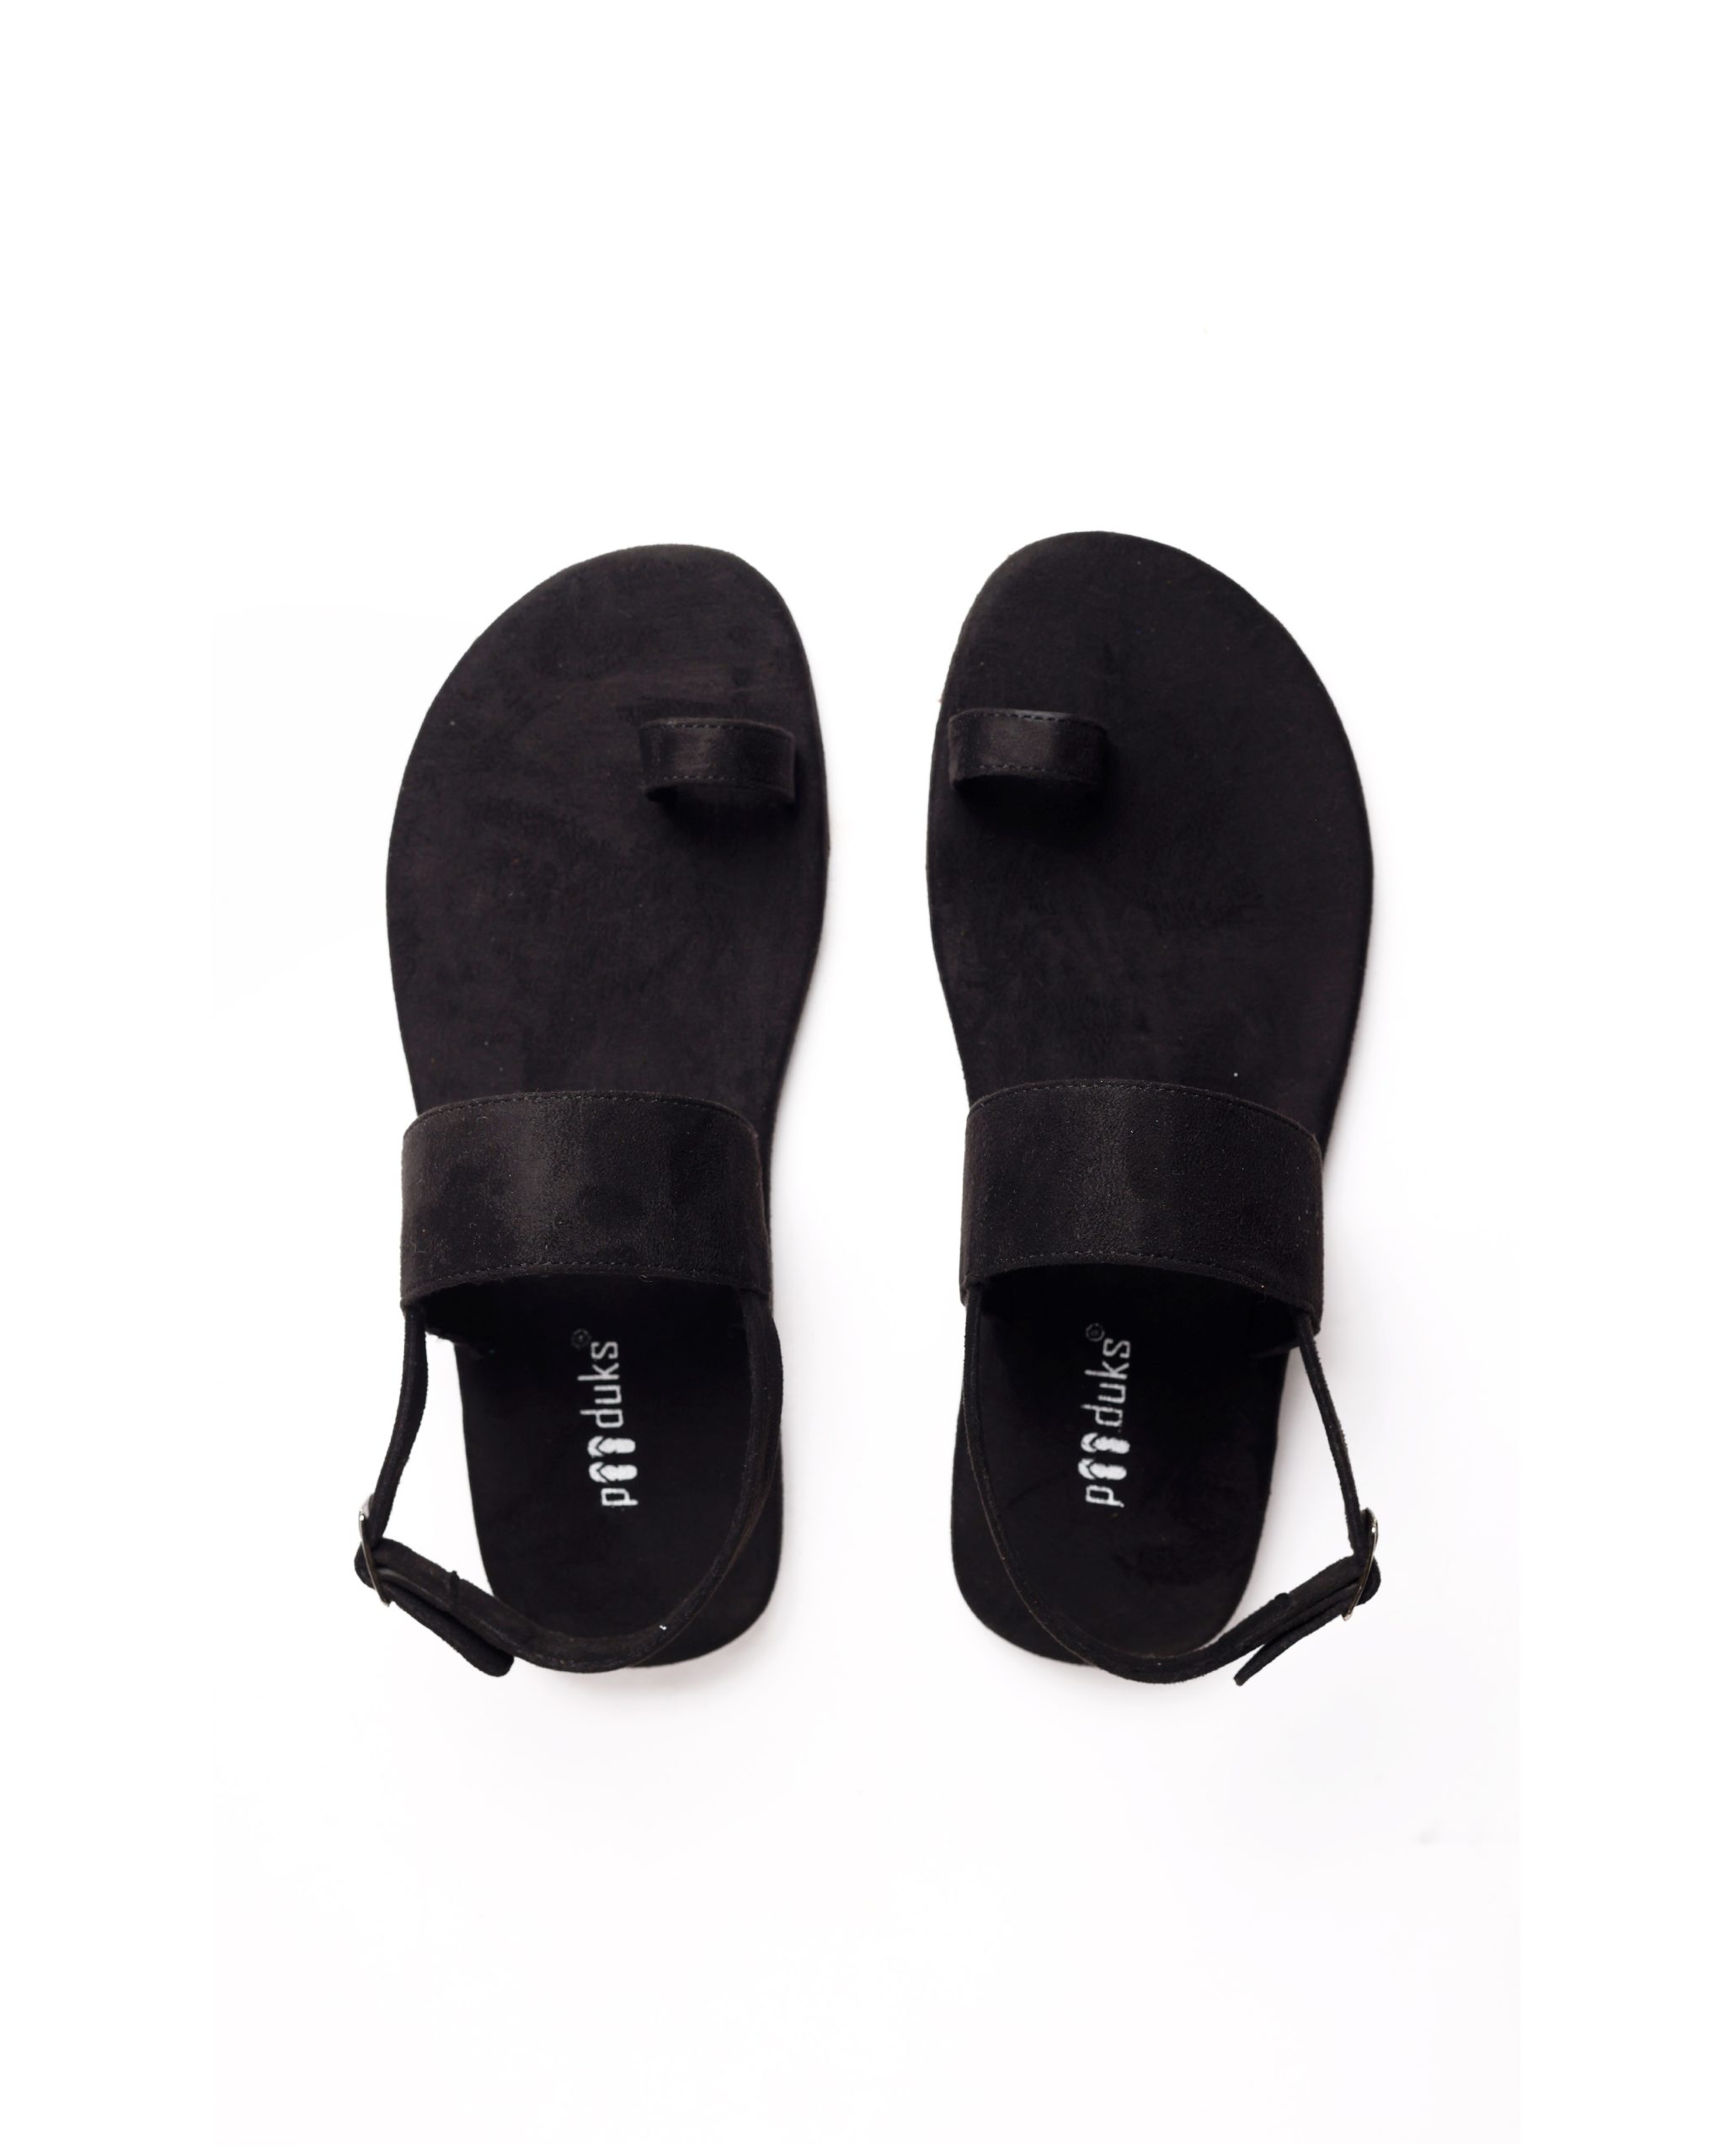 Product: Paaduks Zoo Black Flat Sandals For Men